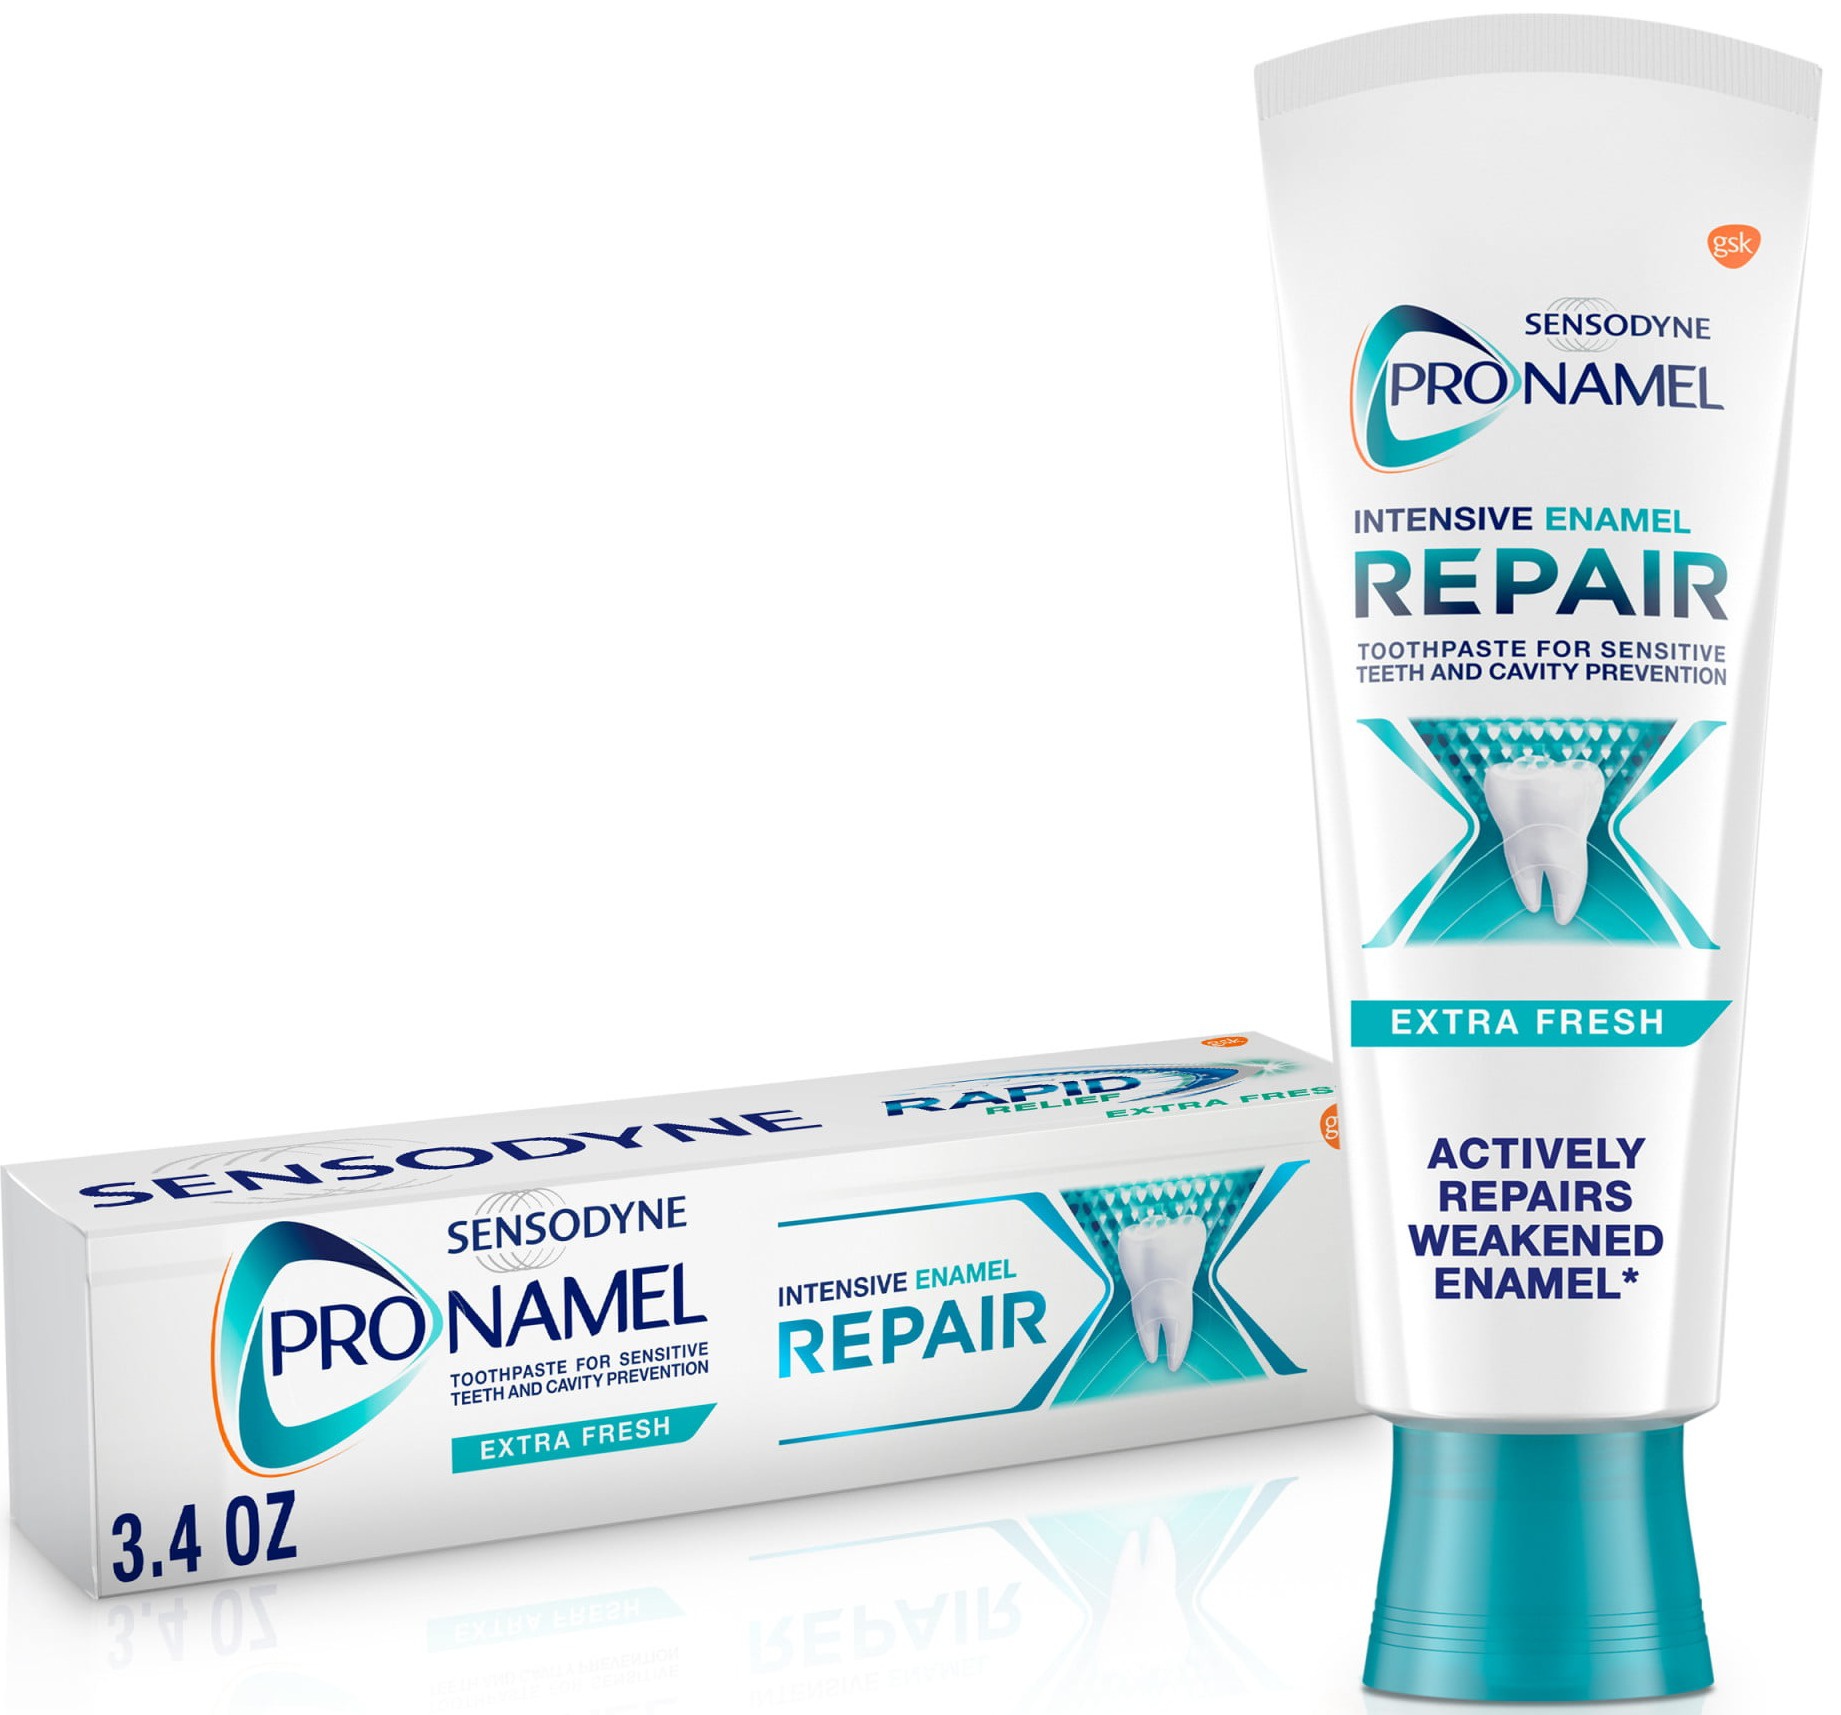 Sensodyne Pronamel Intensive Enamel Repair Extra Fresh